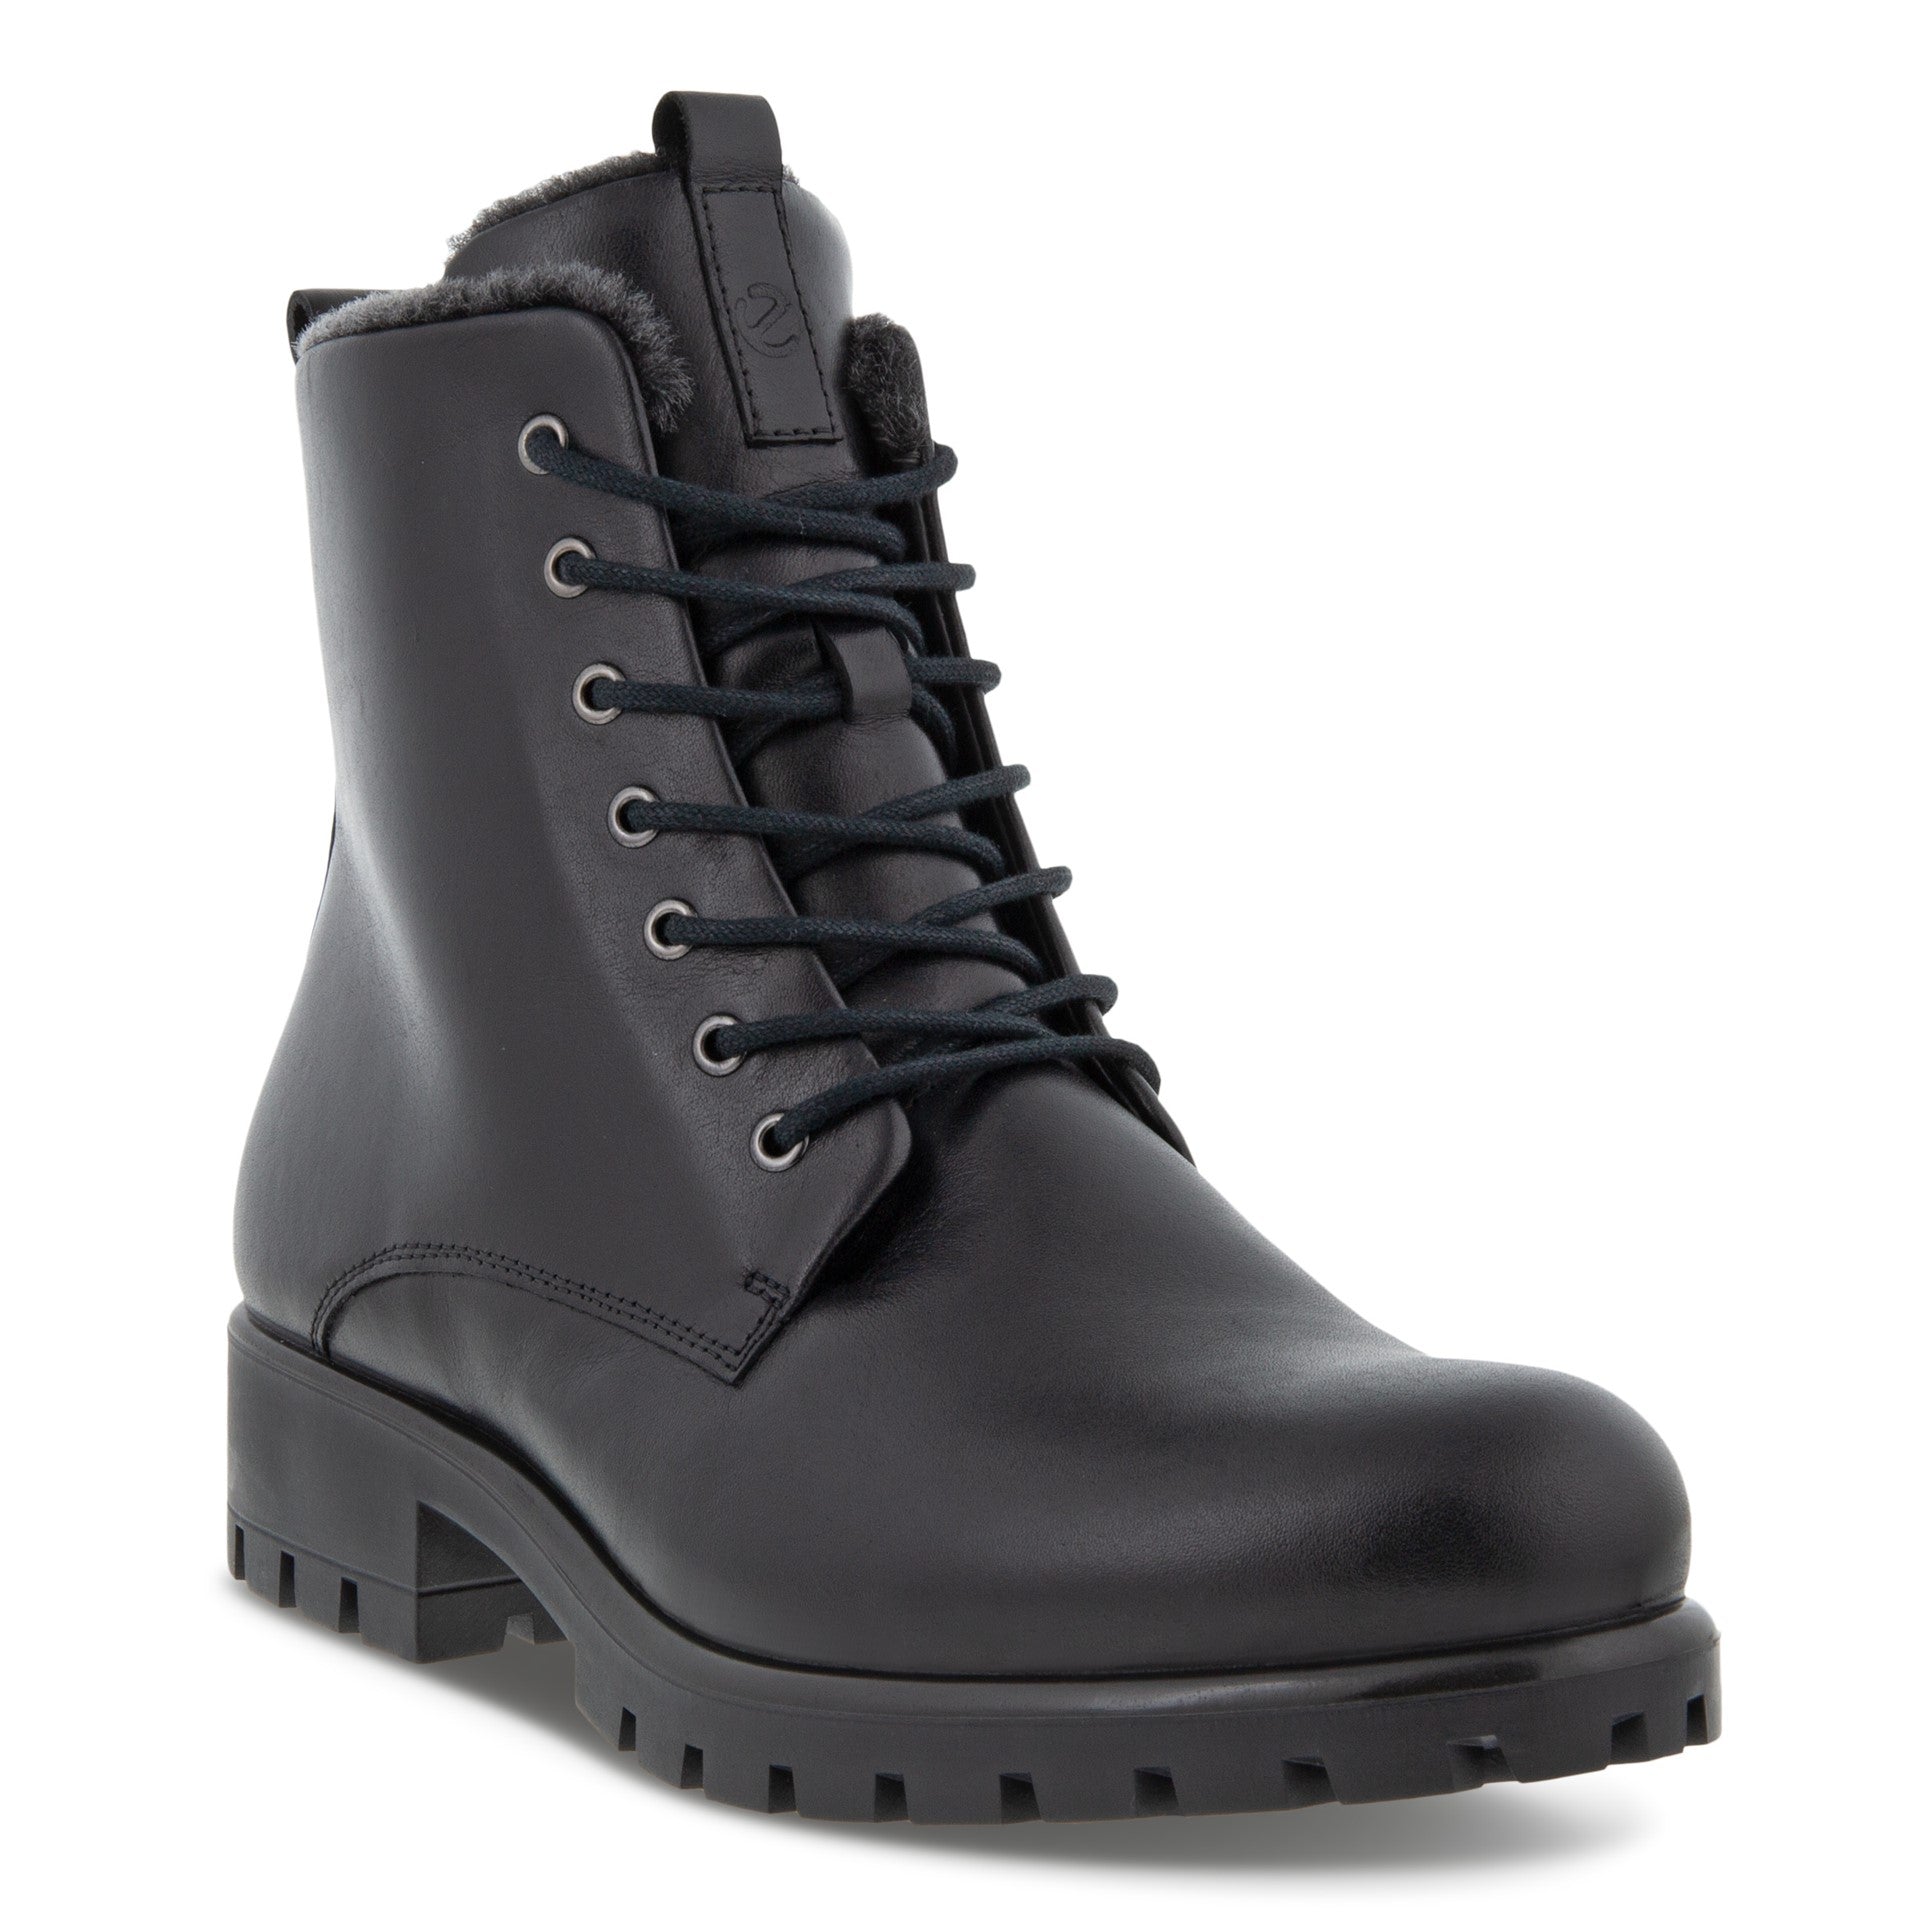 ECCO modtray winter boot women black